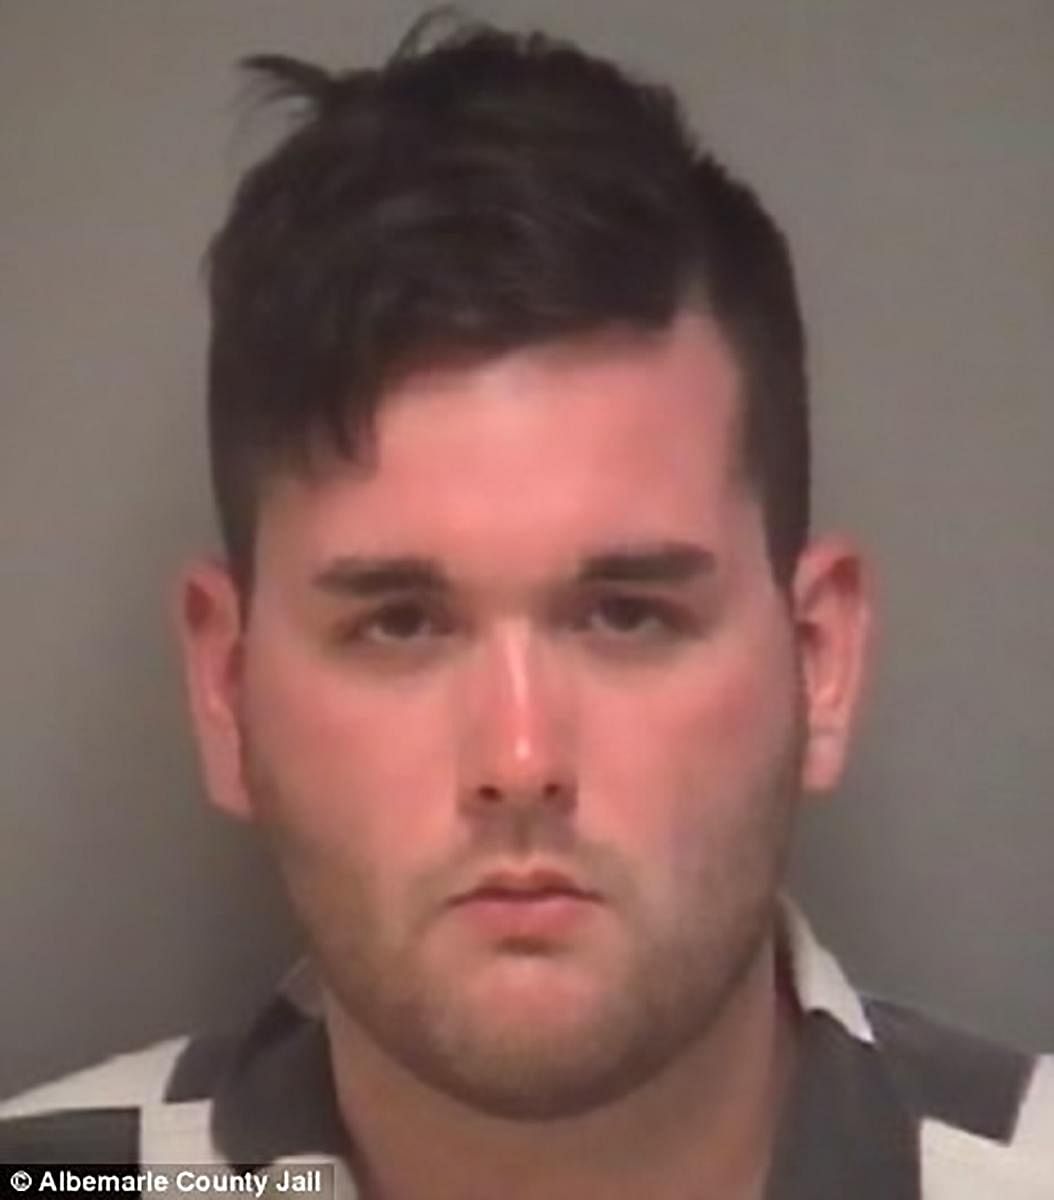 Neo-Nazi in Charlottesville attack given life sentence